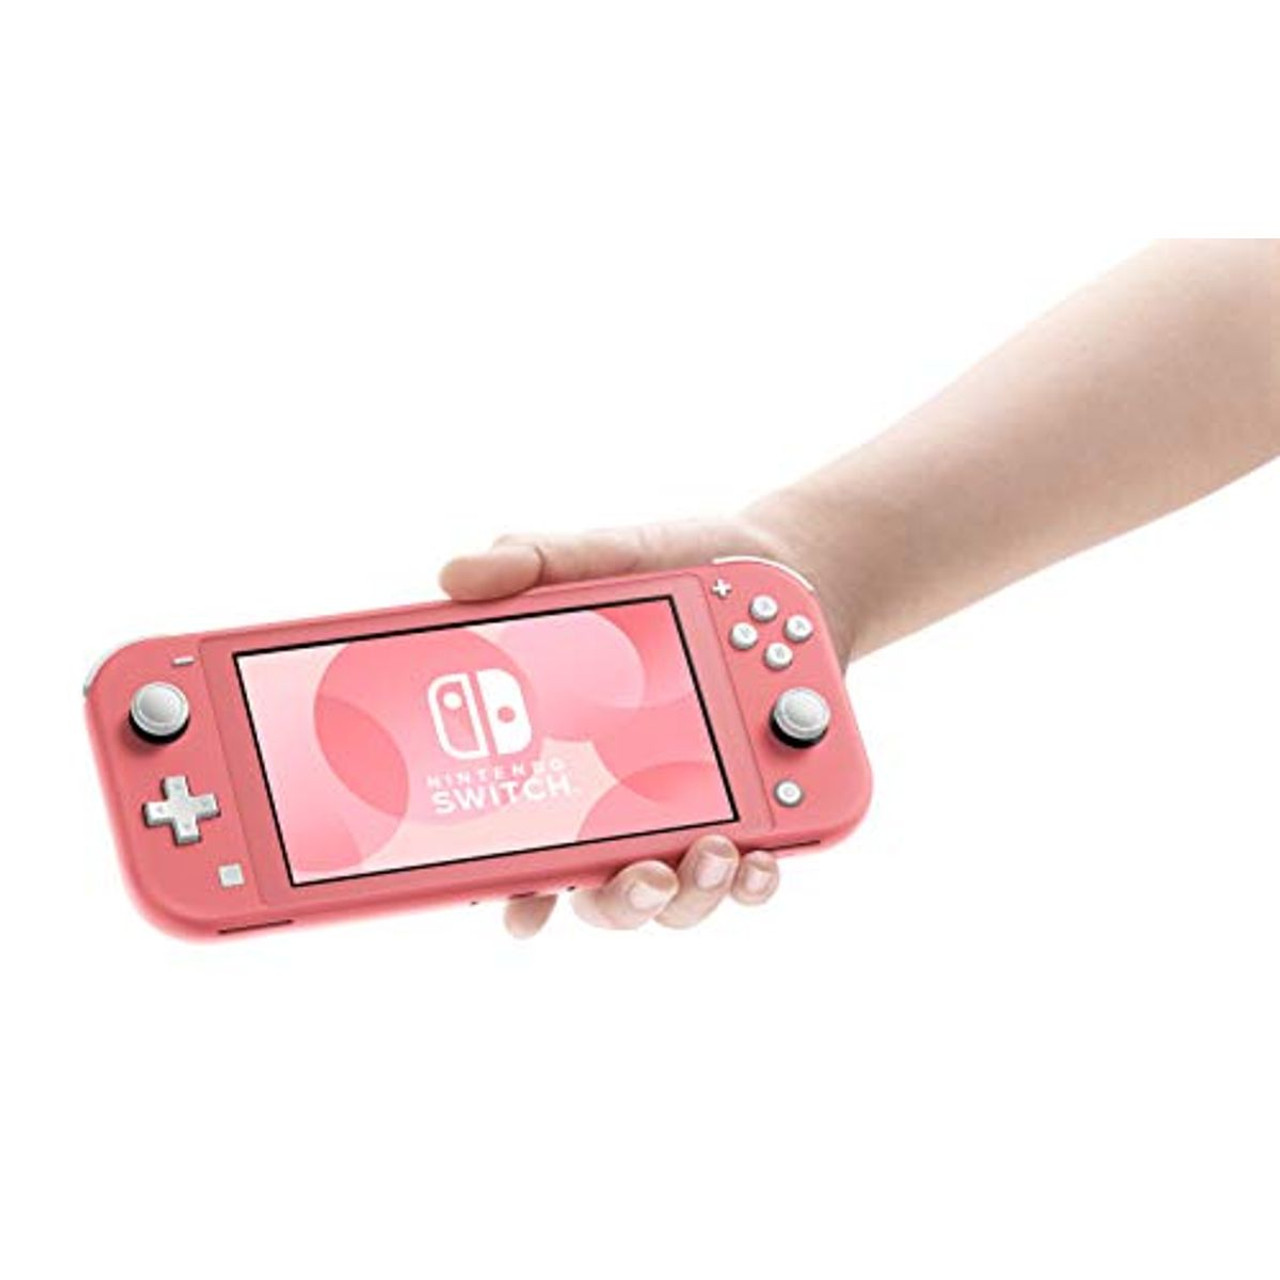 Nintendo Switch Lite product image